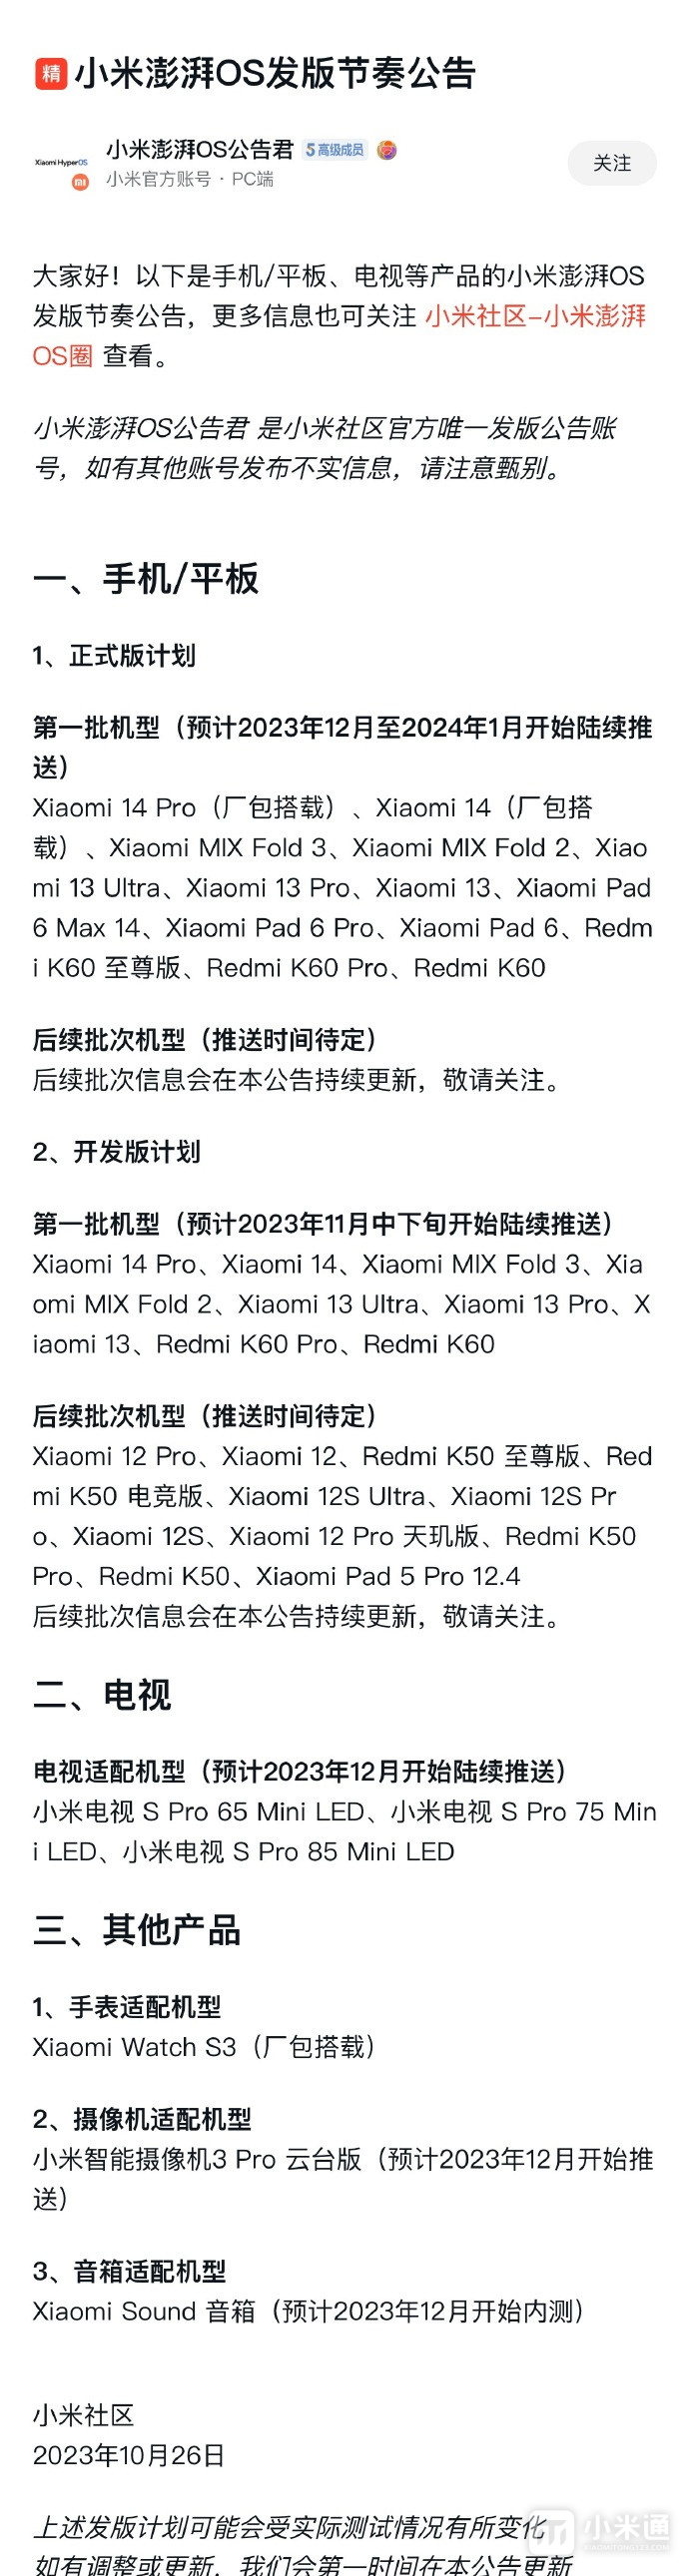 Redmi K50如何升级澎湃OS